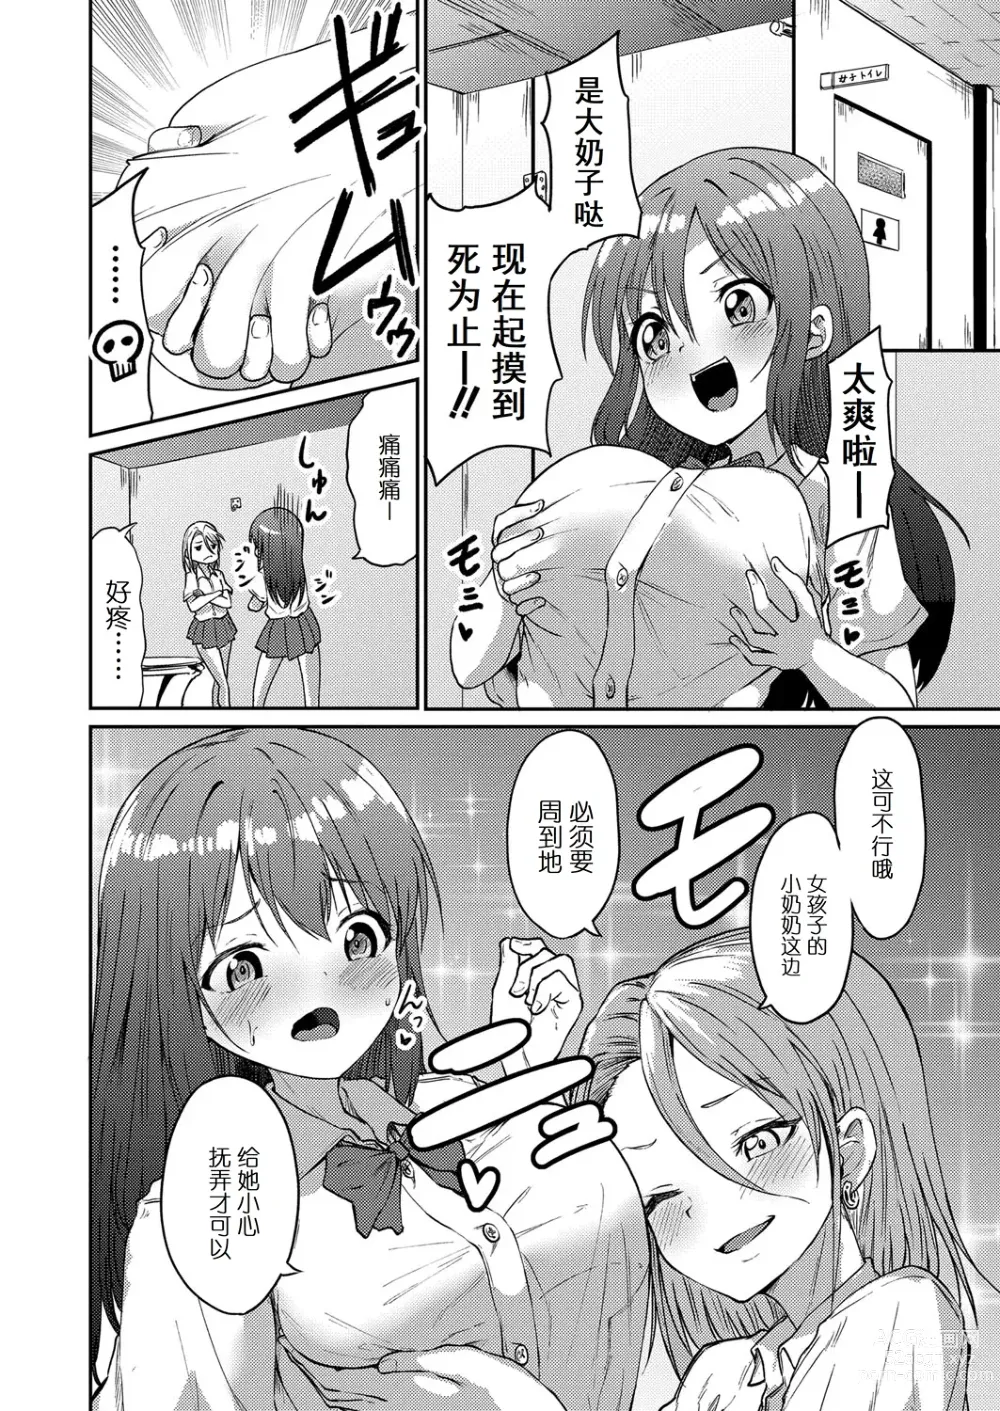 Page 4 of manga IREKAWARI